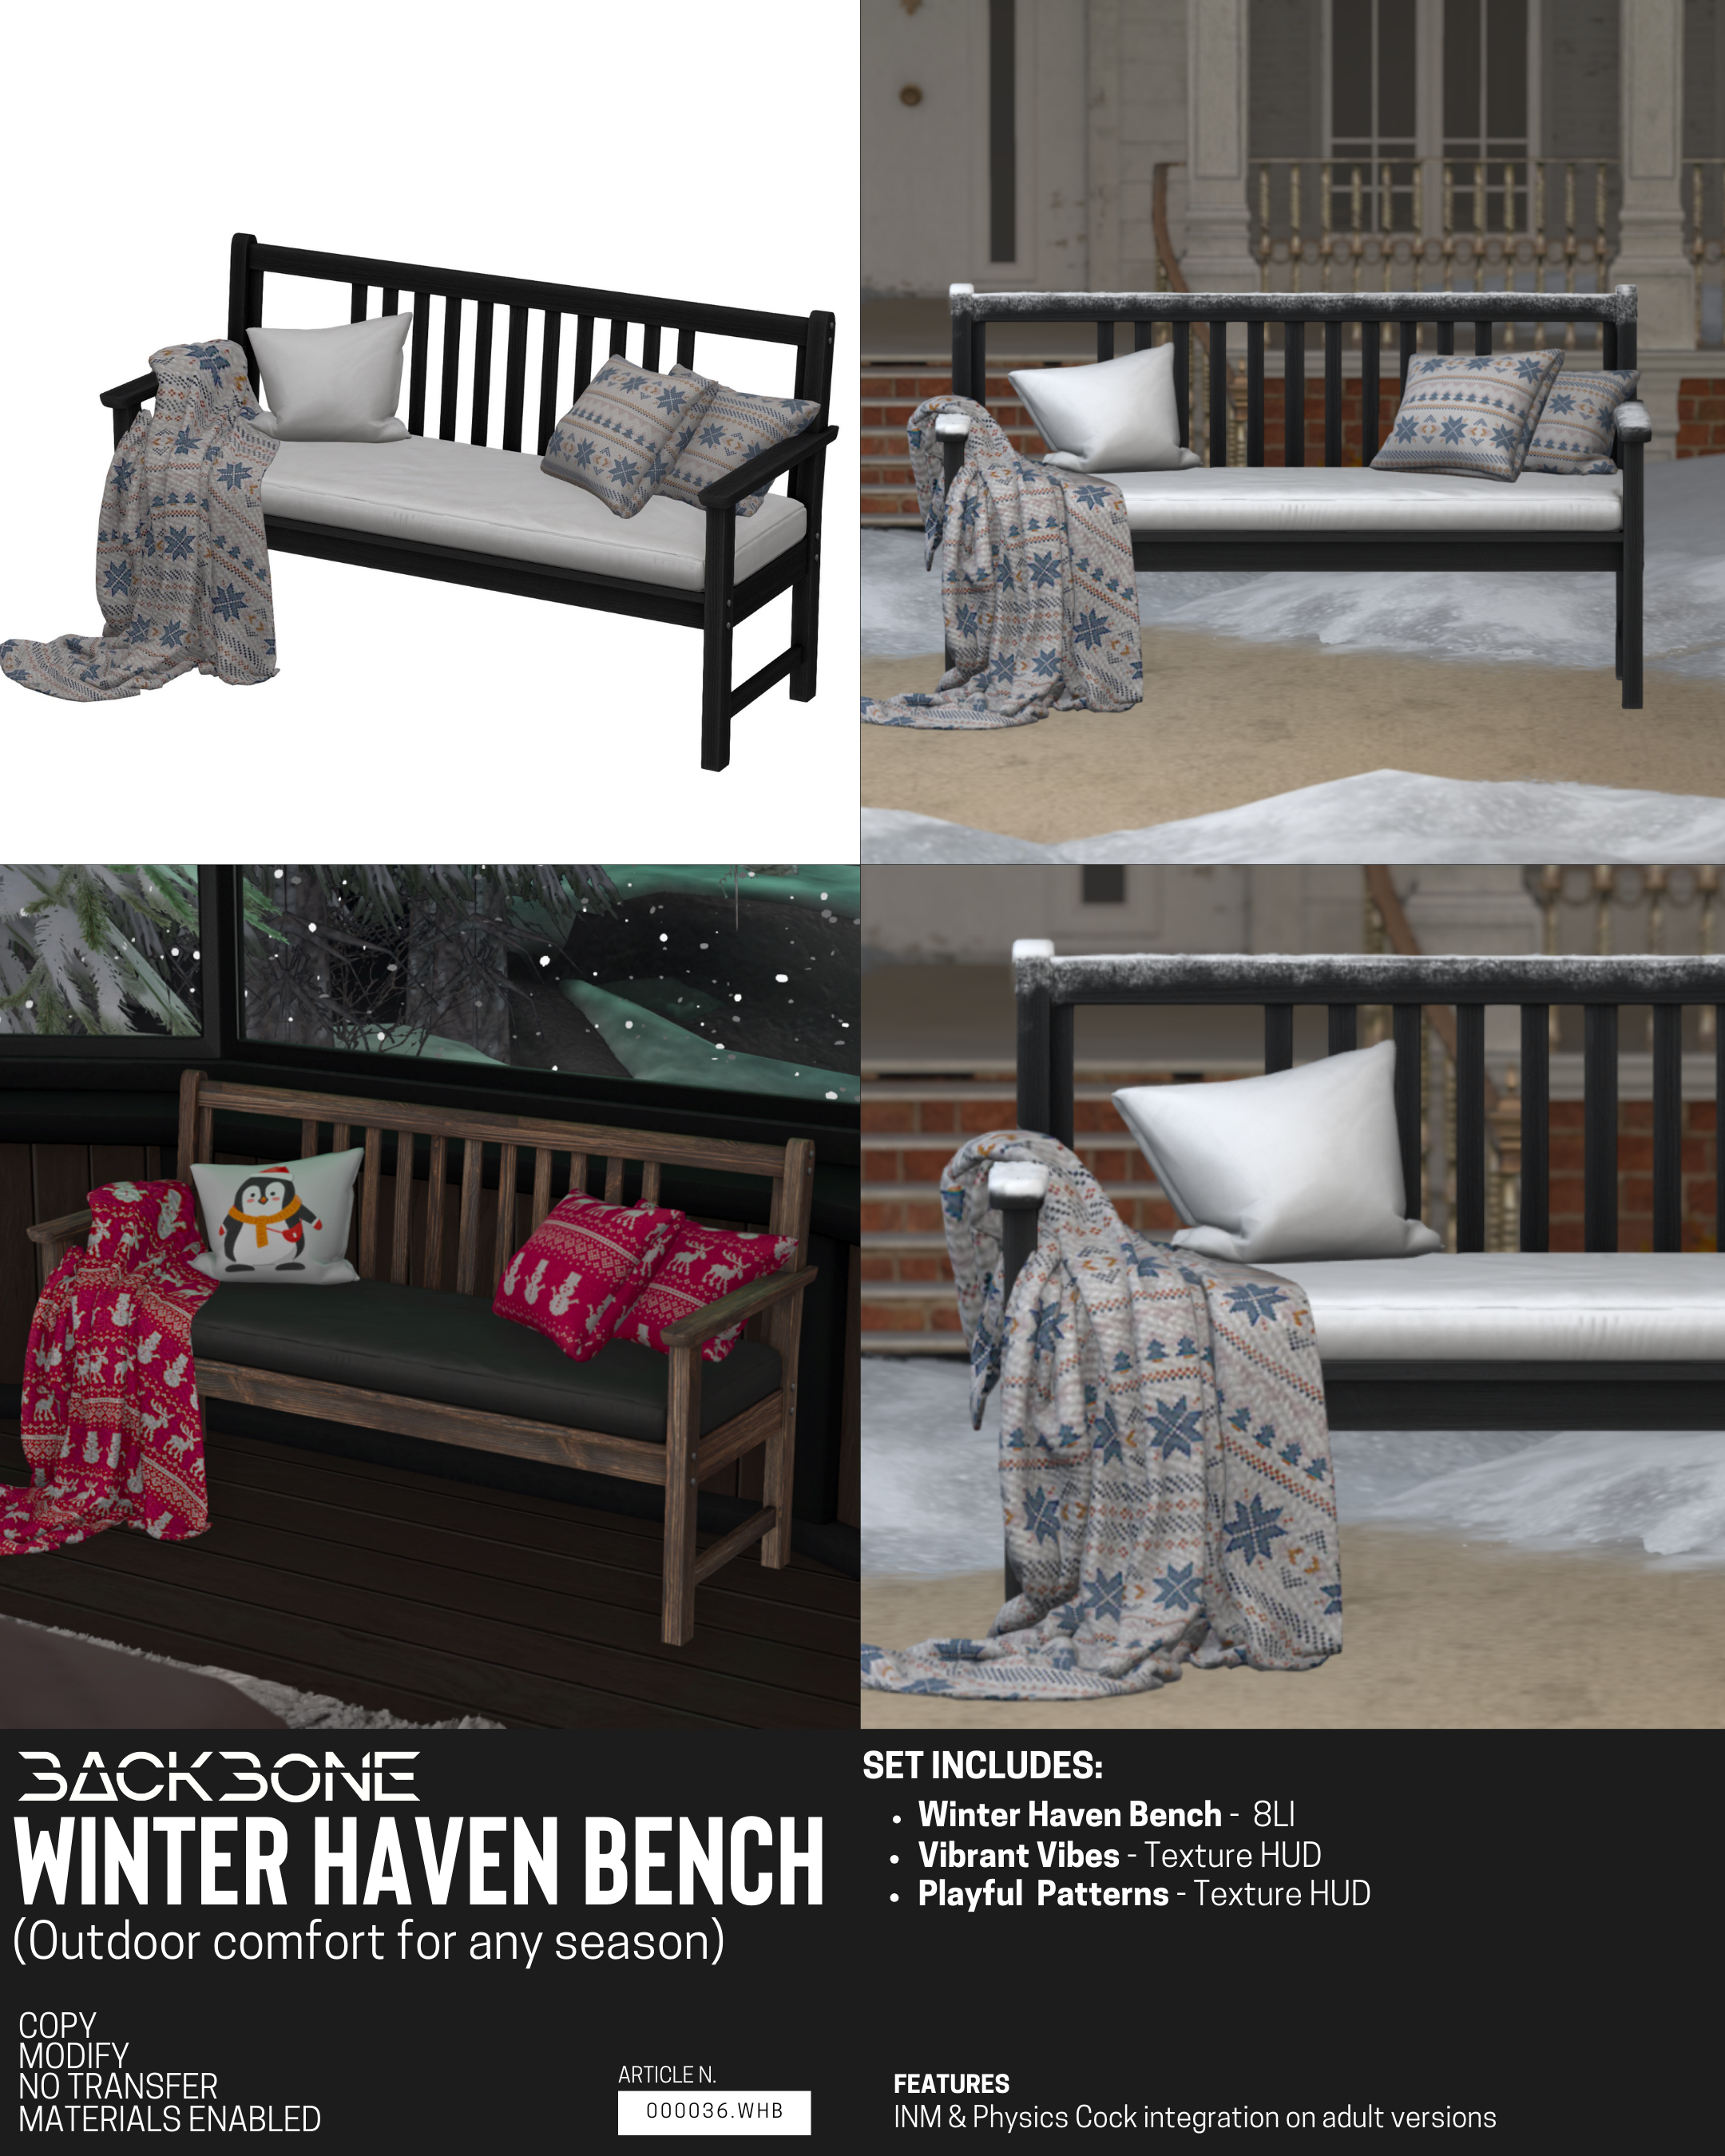 Backbone – Winter Haven Bench